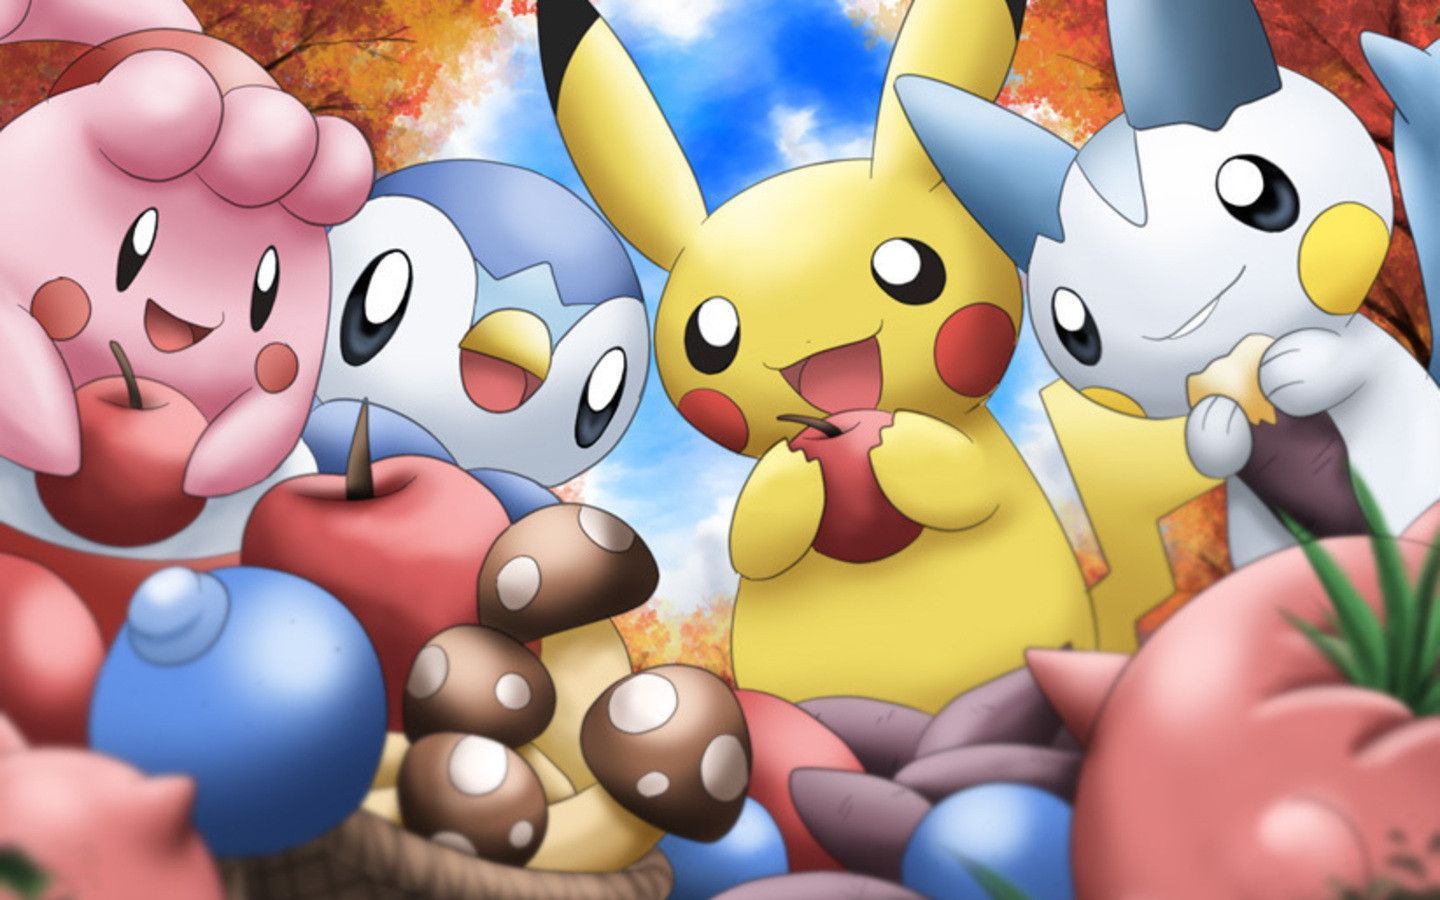 Download Cute Pokemon Free Wallpaper 1440x900. Full HD Wallpaper. Cute pokemon wallpaper, Cute pokemon, Cute pokemon picture